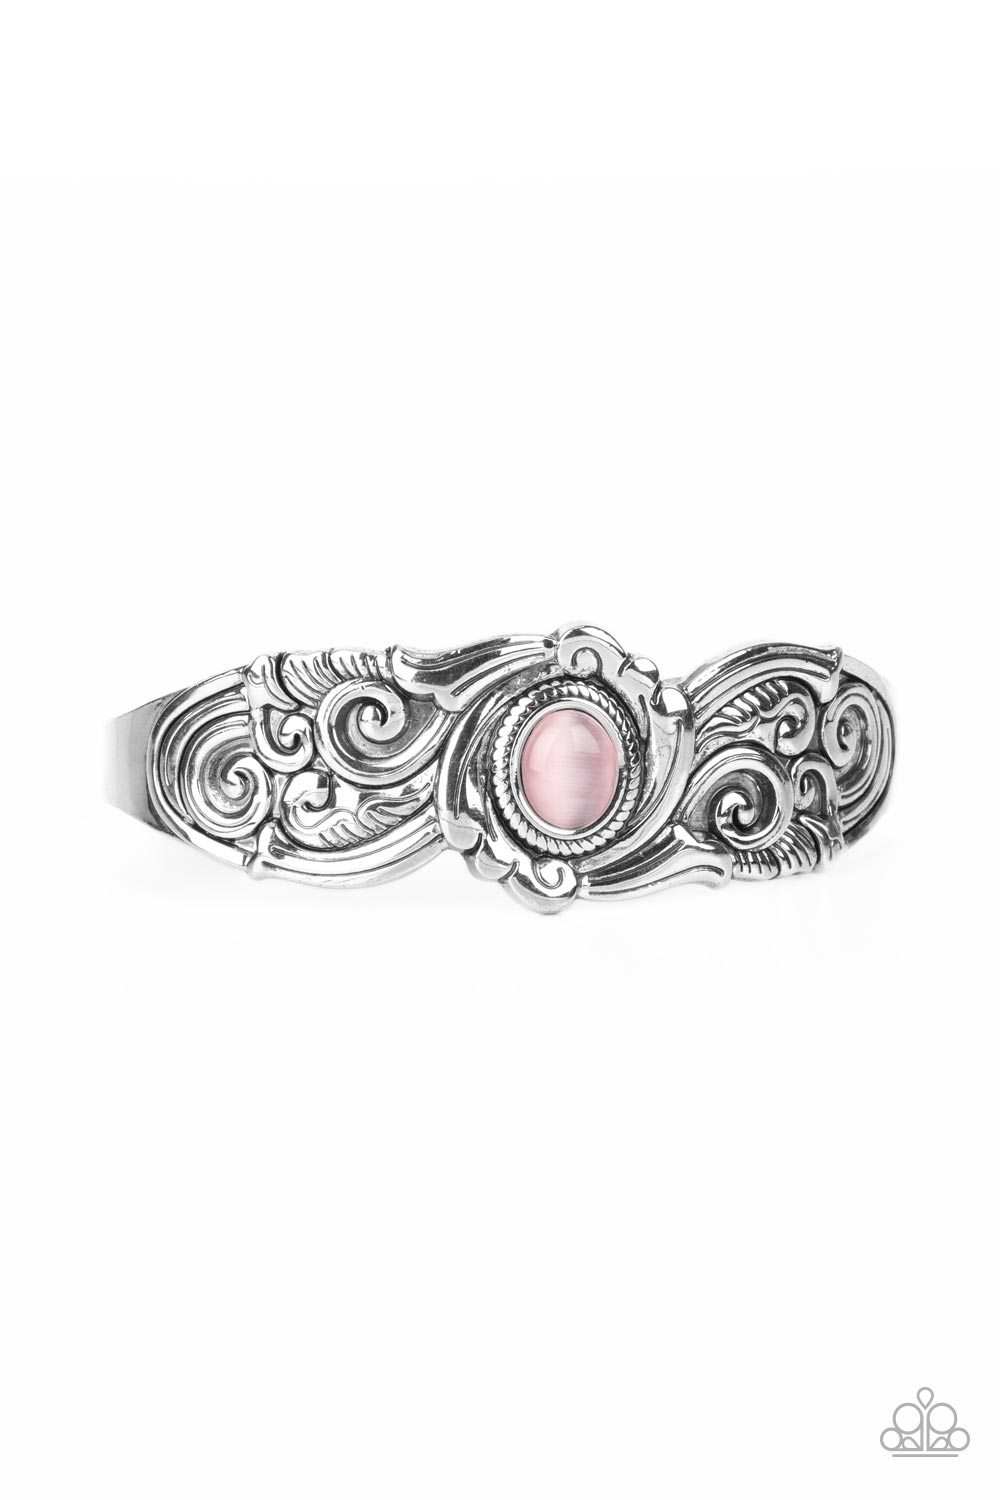 Glowing Enchantment Pink Cat&#39;s Eye Stone Cuff Bracelet - Paparazzi Accessories- lightbox - CarasShop.com - $5 Jewelry by Cara Jewels